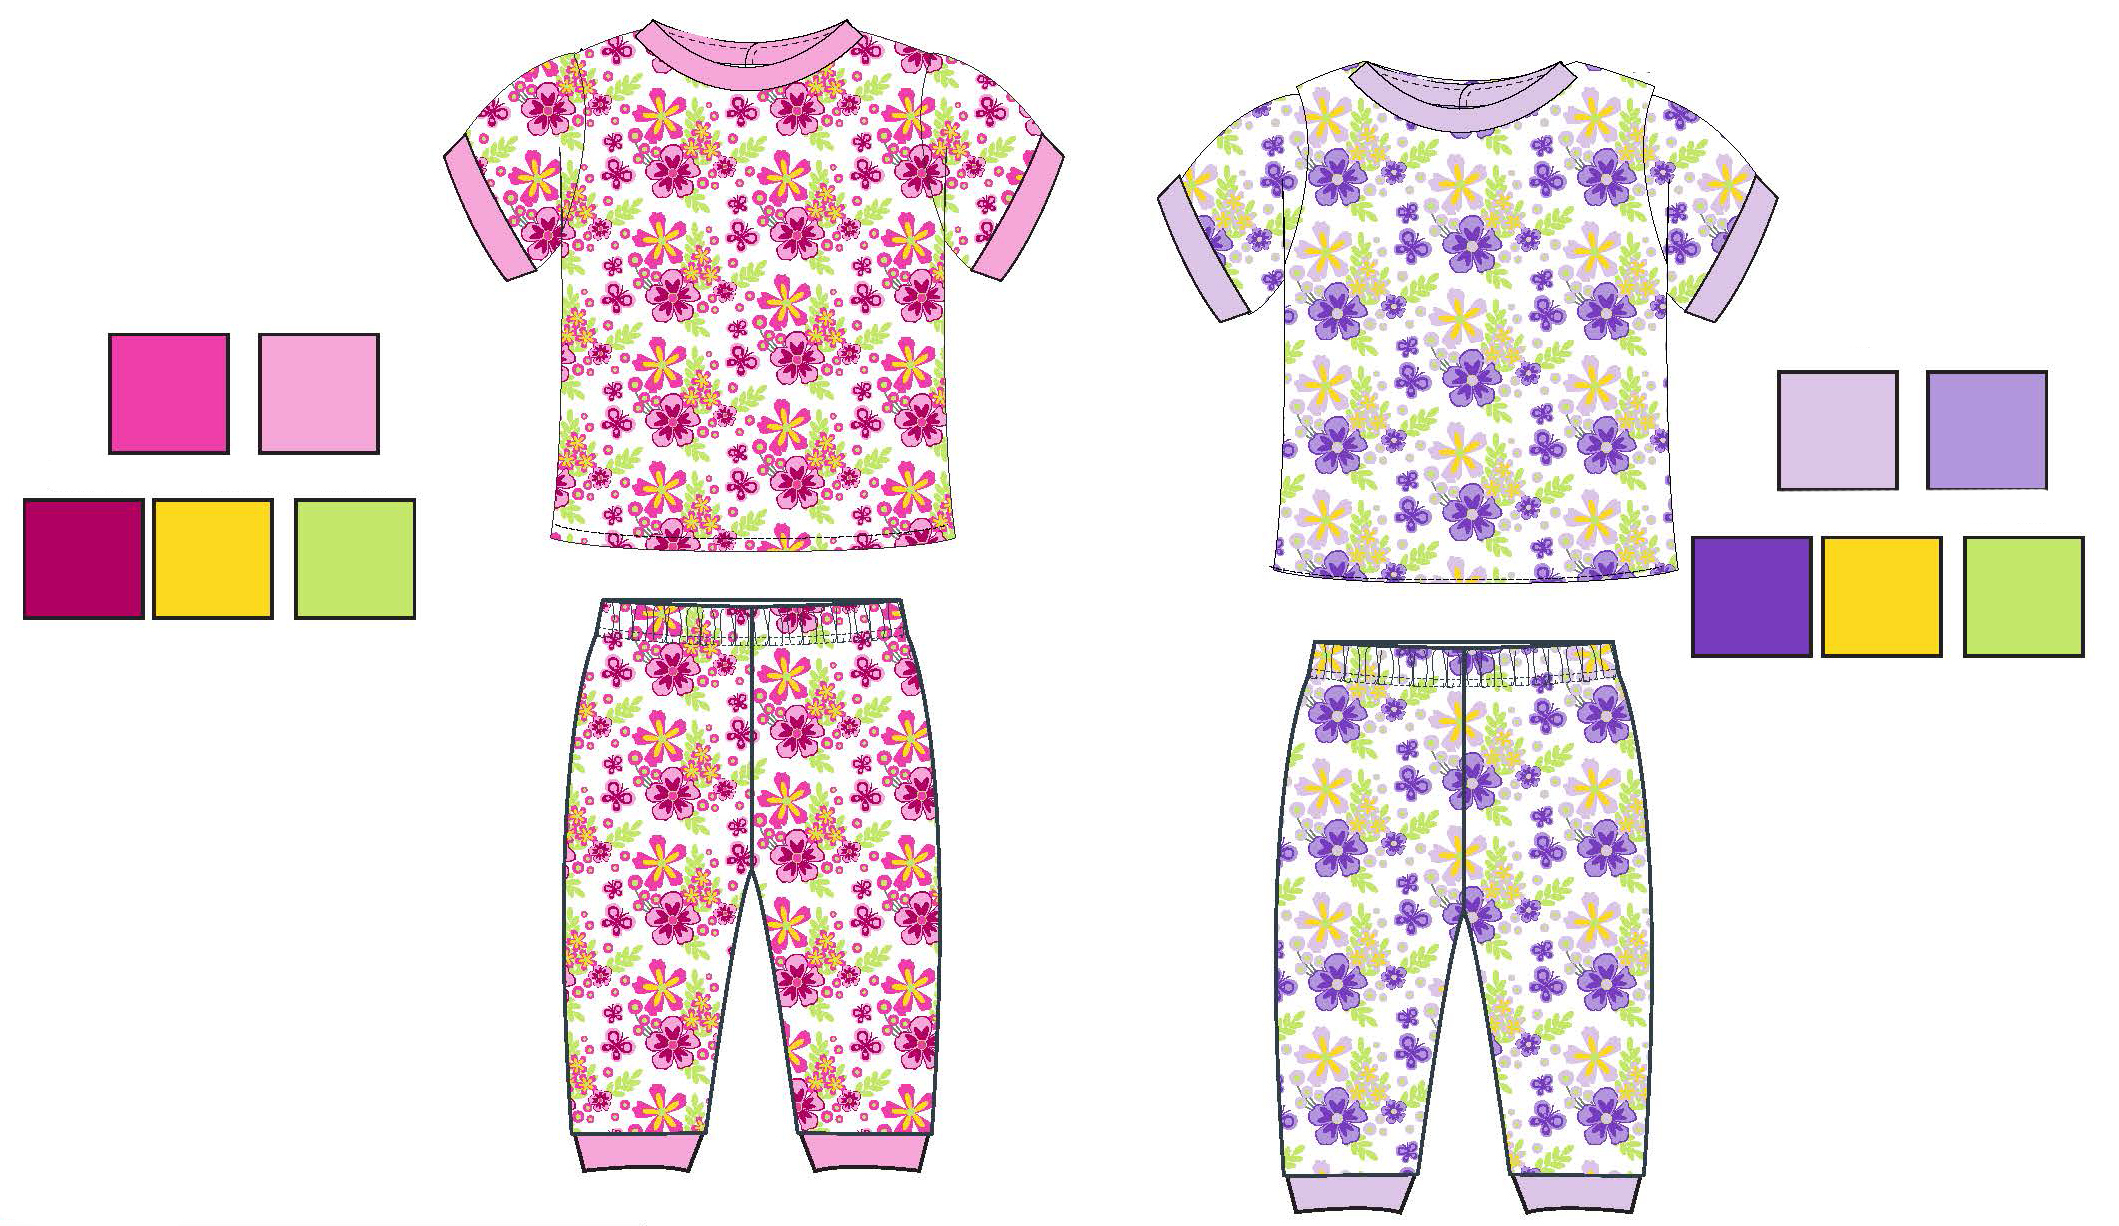 Girl's 2 PC. Short-Sleeve Rib PAJAMAS Sets w/ Floral Print - Sizes 6-10